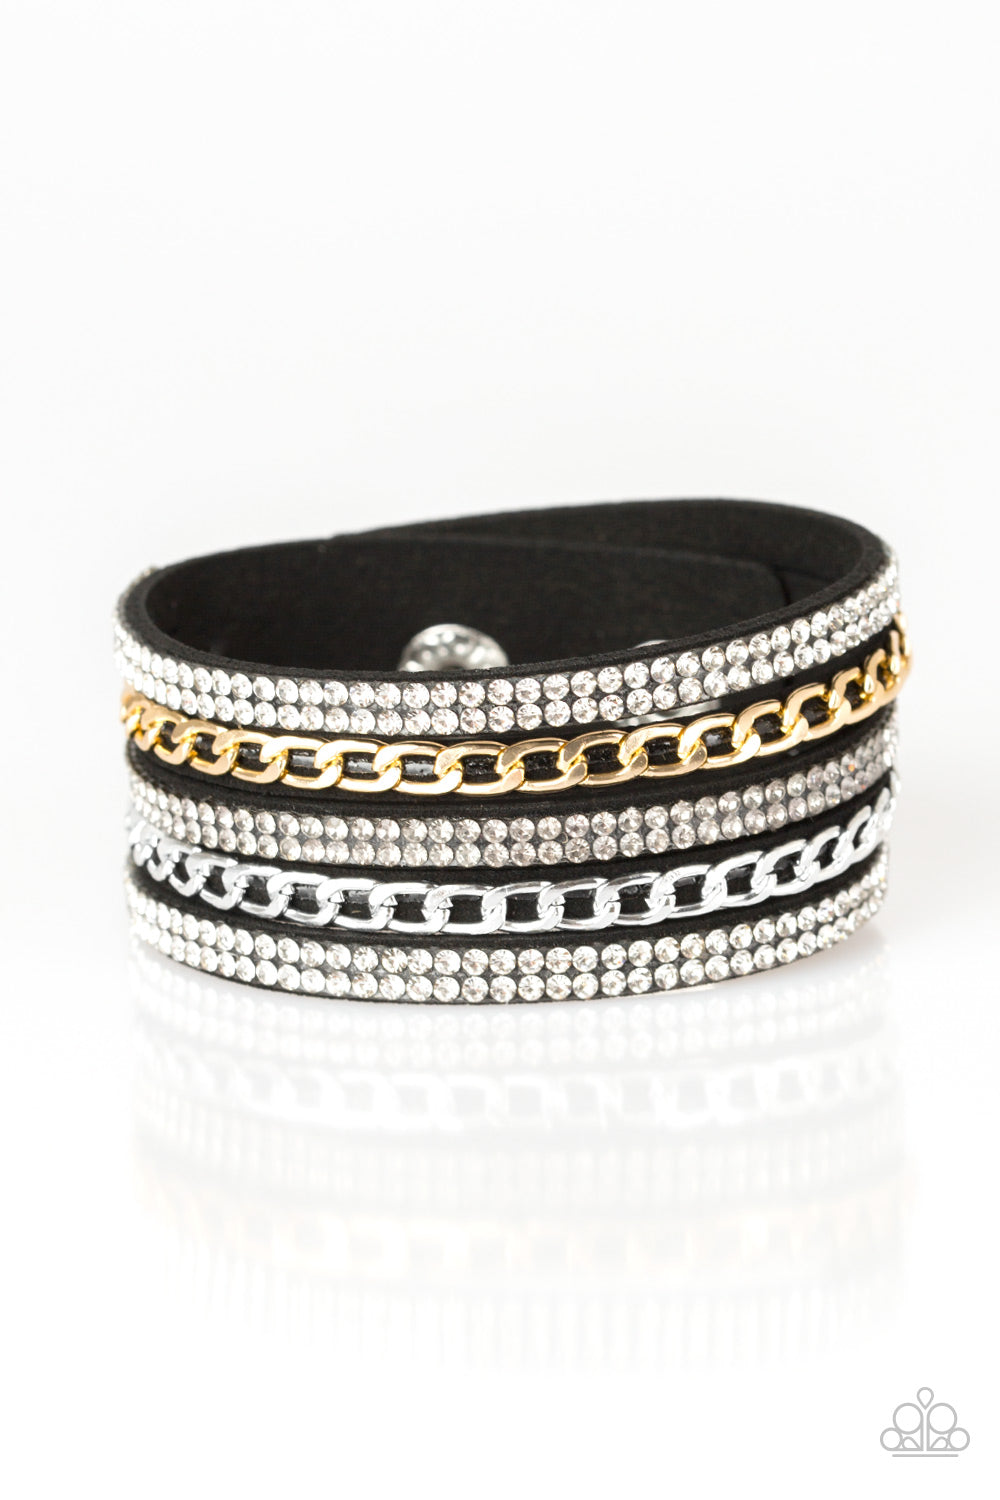 Paparazzi Accessories - Fashion Fiend - Black Bracelet - Alies Bling Bar